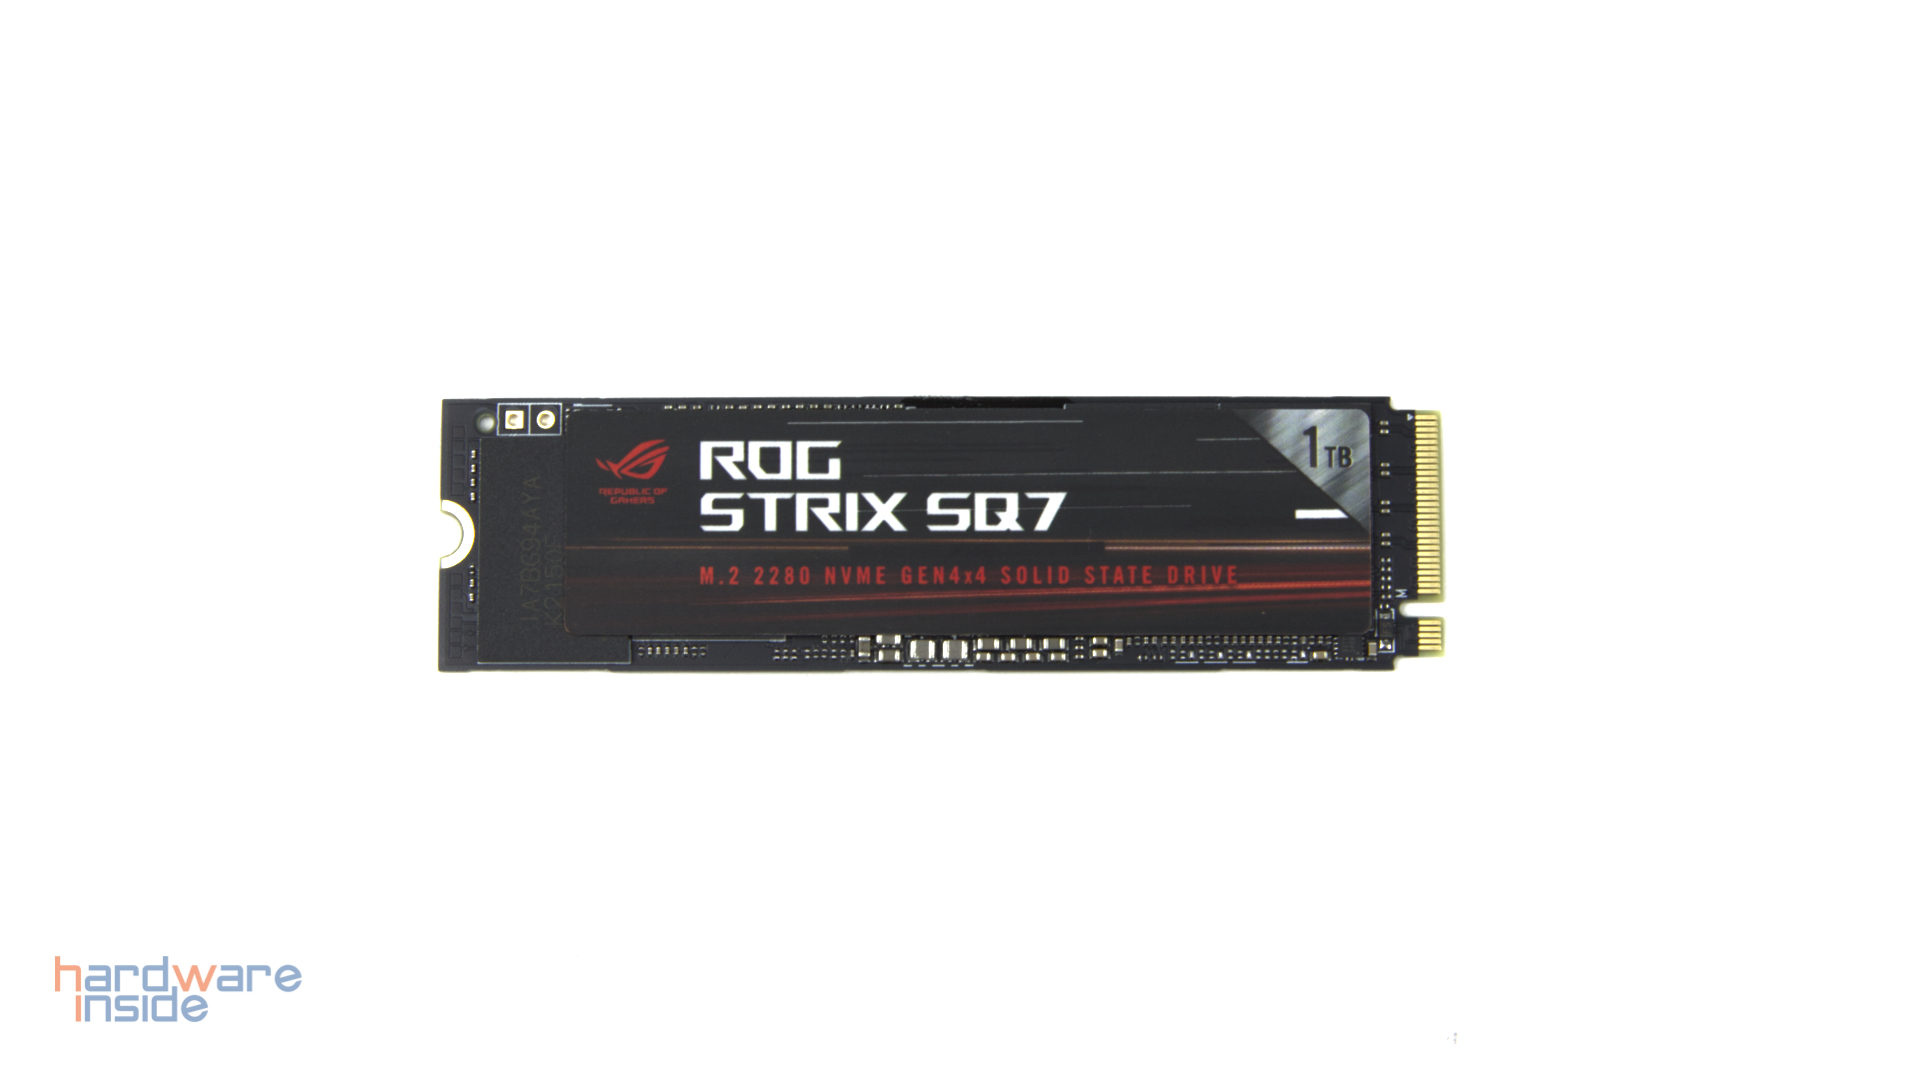 ASUS-ROG-Strix-SQ7-1TB-Review-4.jpg